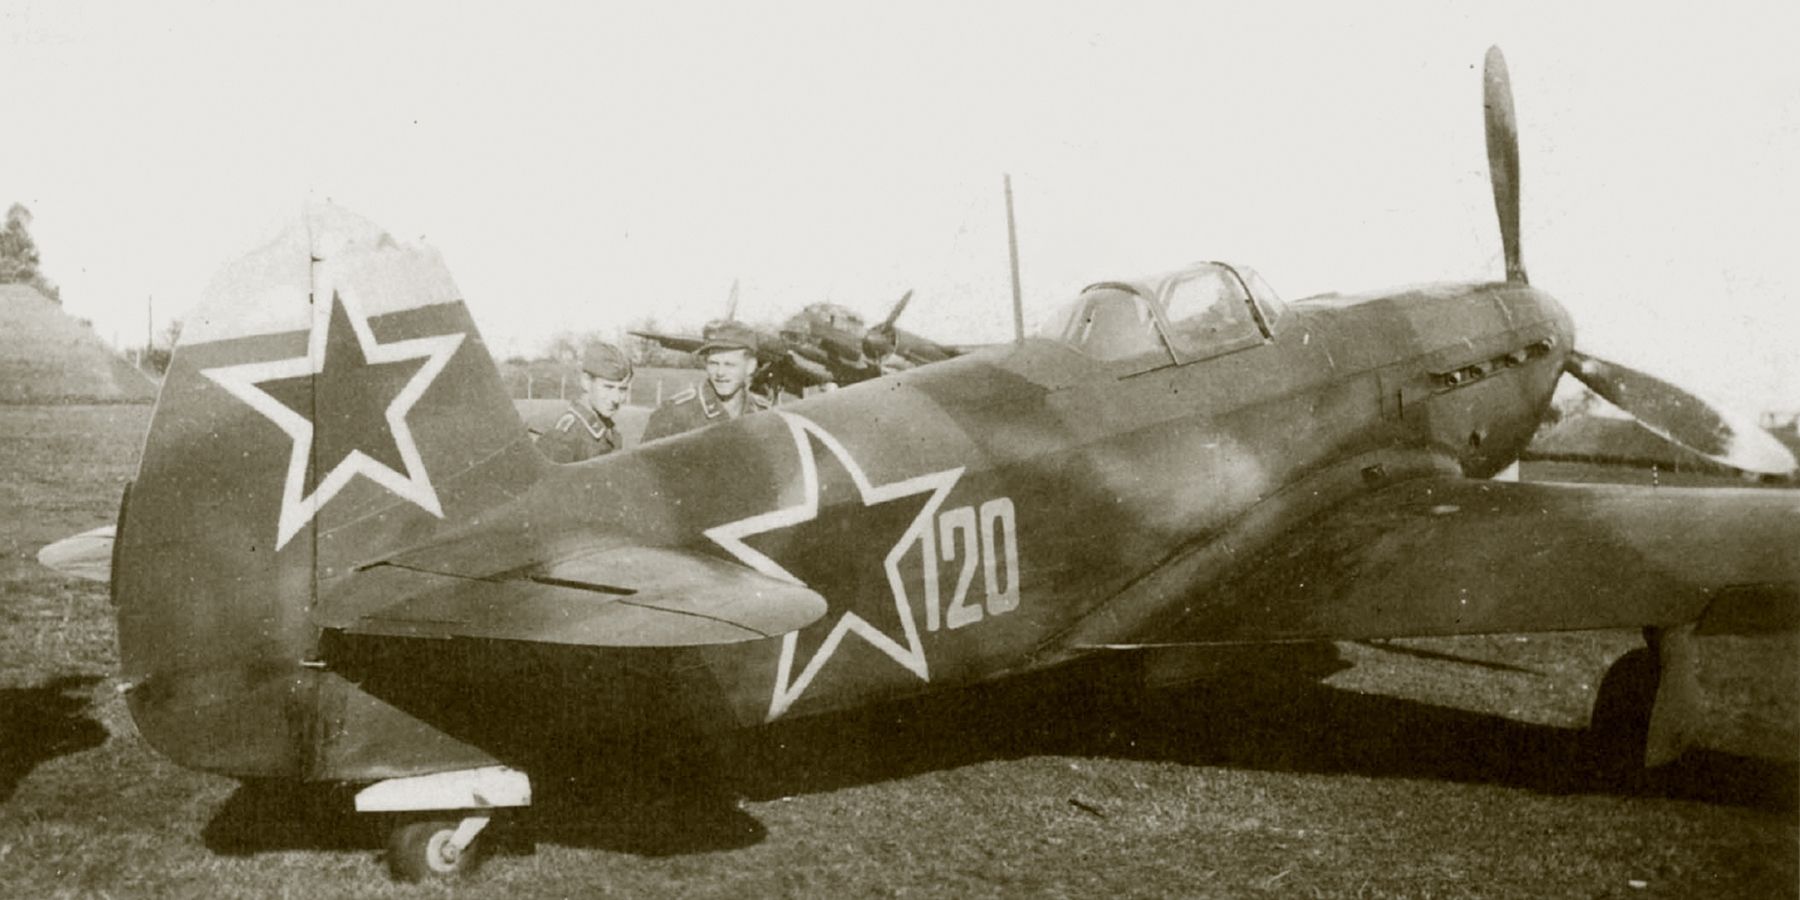 Yakovlev Yak-7B late series, "Yellow 120" captured by Germans, Hungary 1945